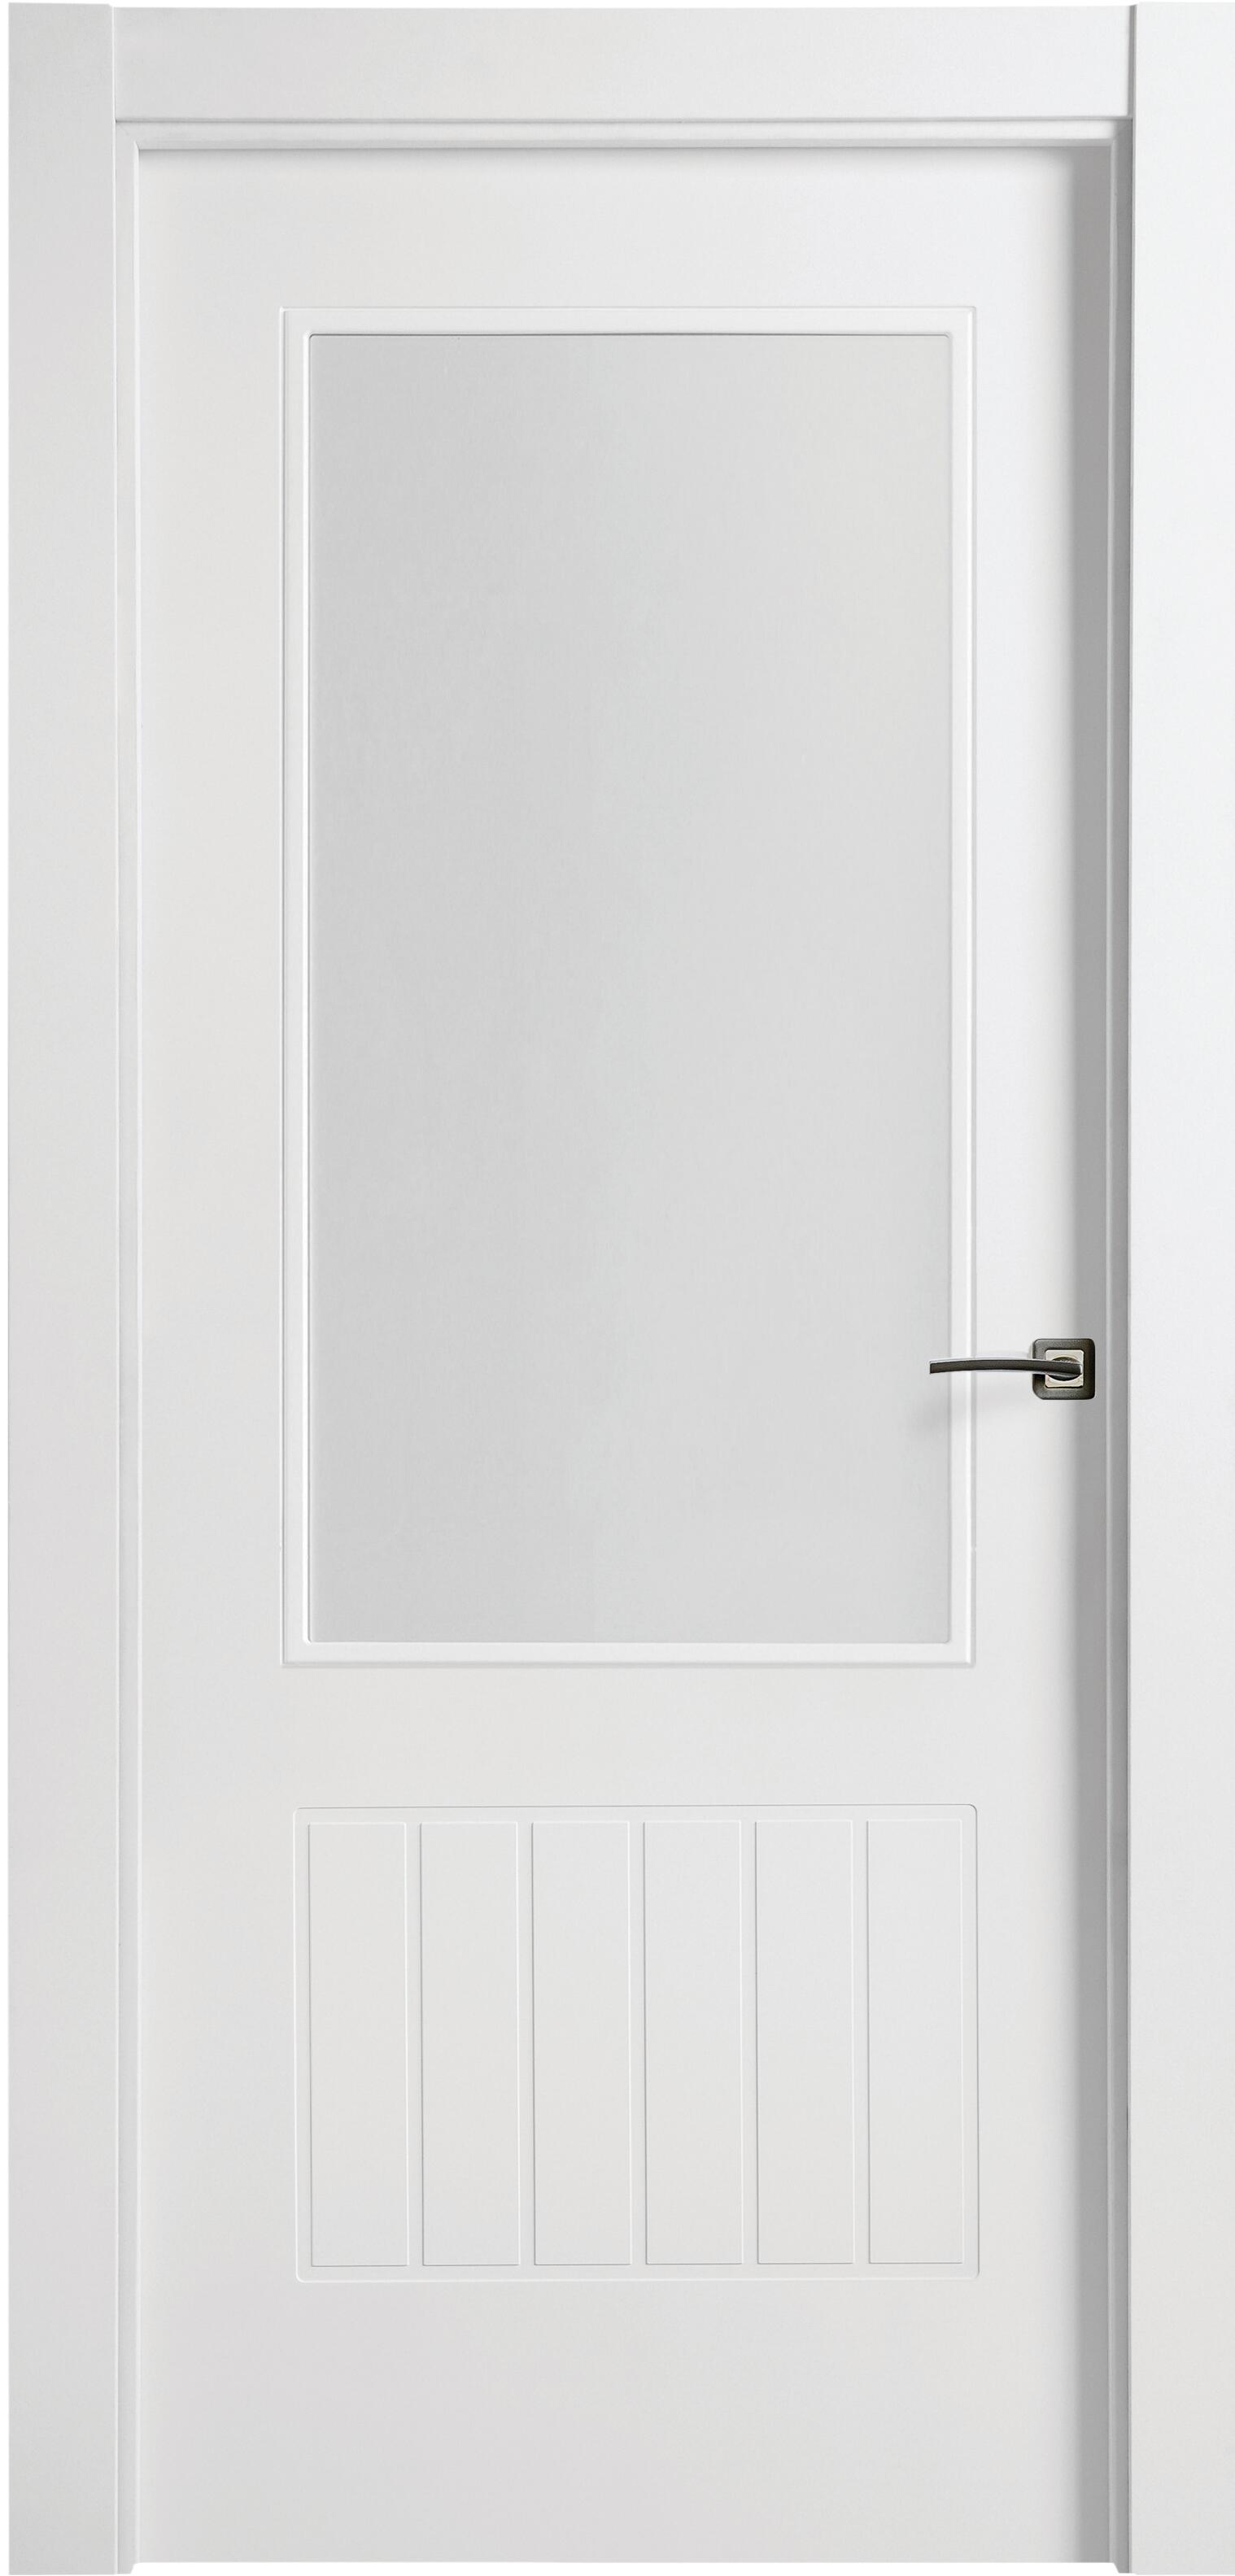 Puerta madison plus blanco apertura izquierda con cristal de 11x 82.5 cm